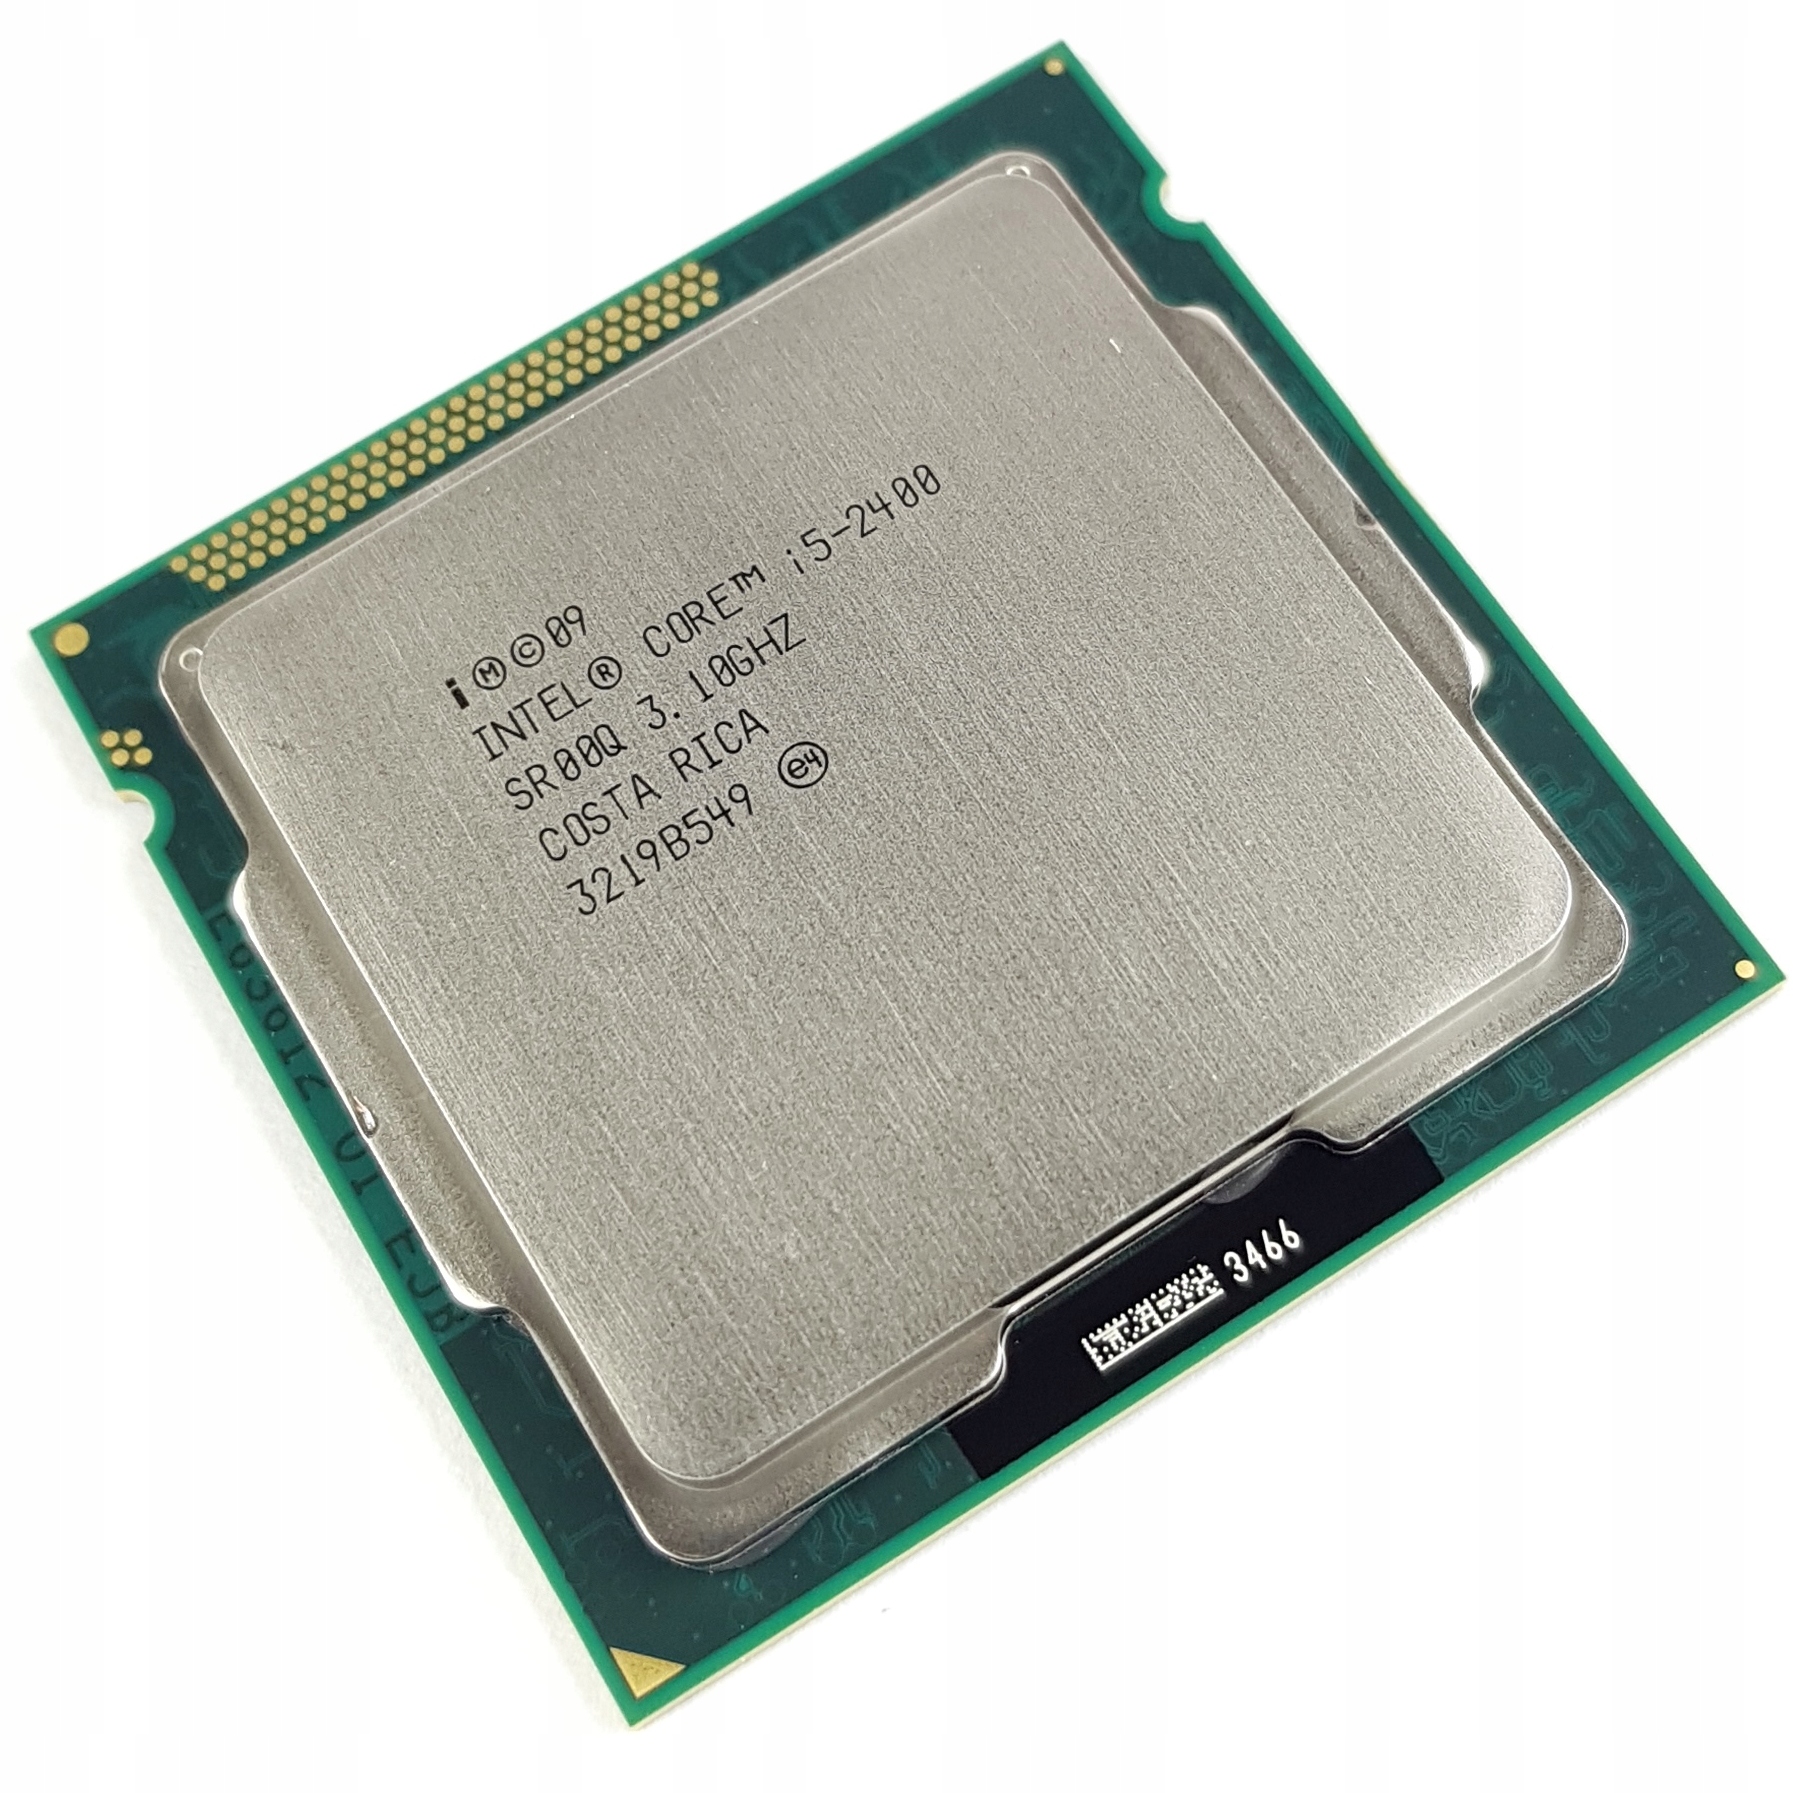 Intel r core tm купить. Intel Core i5-2400 Sandy Bridge lga1155, 4 x 3100 МГЦ. I5 2400 CPU @ 3.10GHZ. Intel Core i5-2400 Sandy Bridge (3100mhz, lga1155, l3 6144kb). Процессор Intel Core i5 1155.